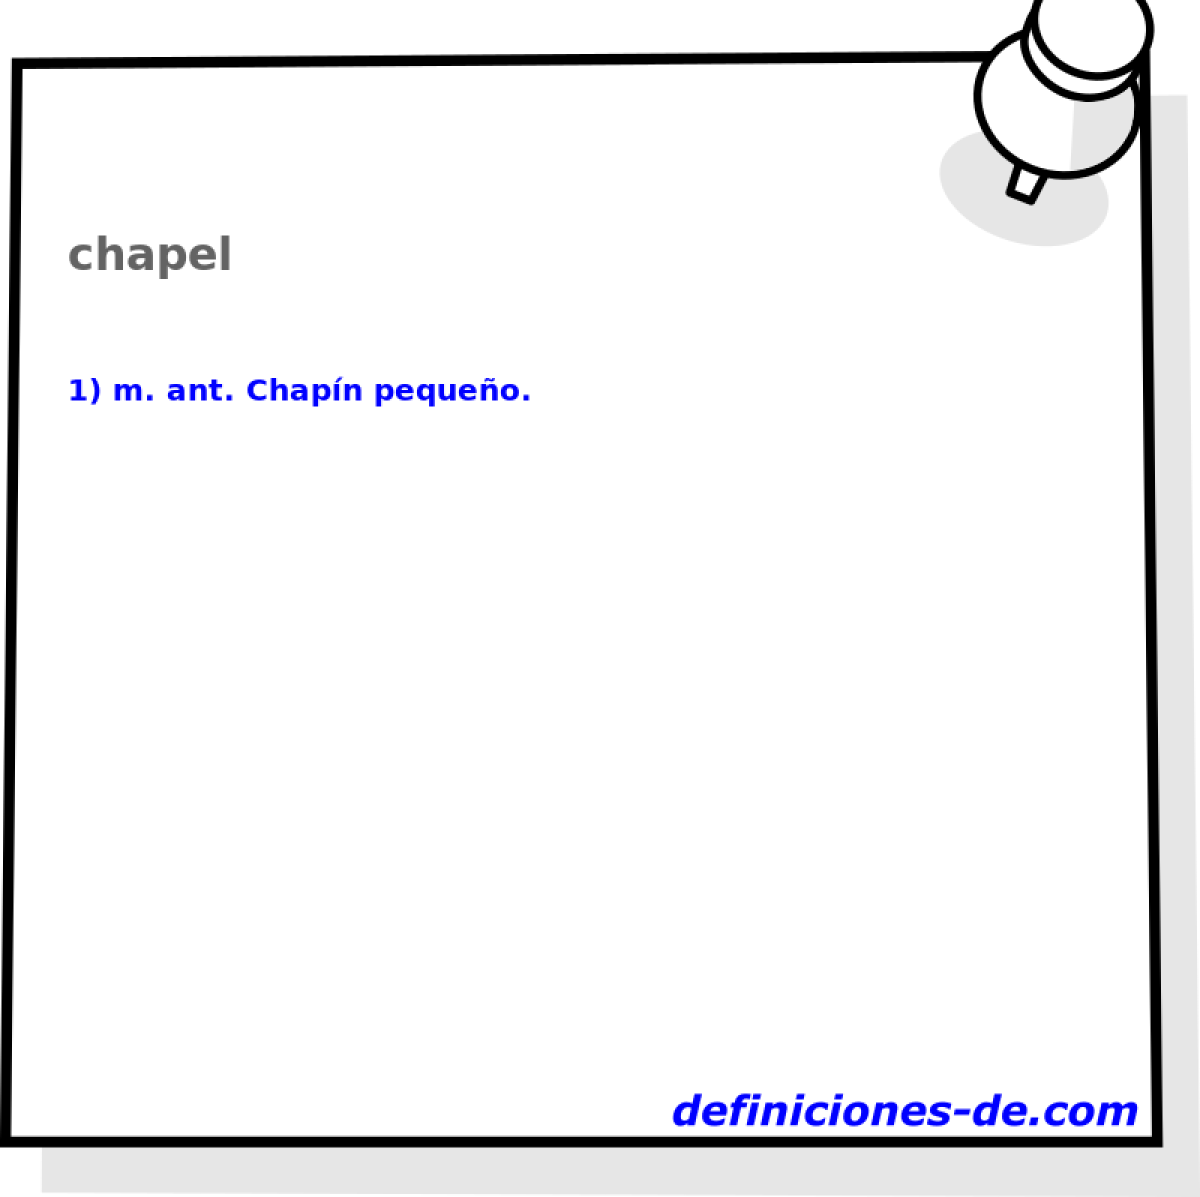 chapel 